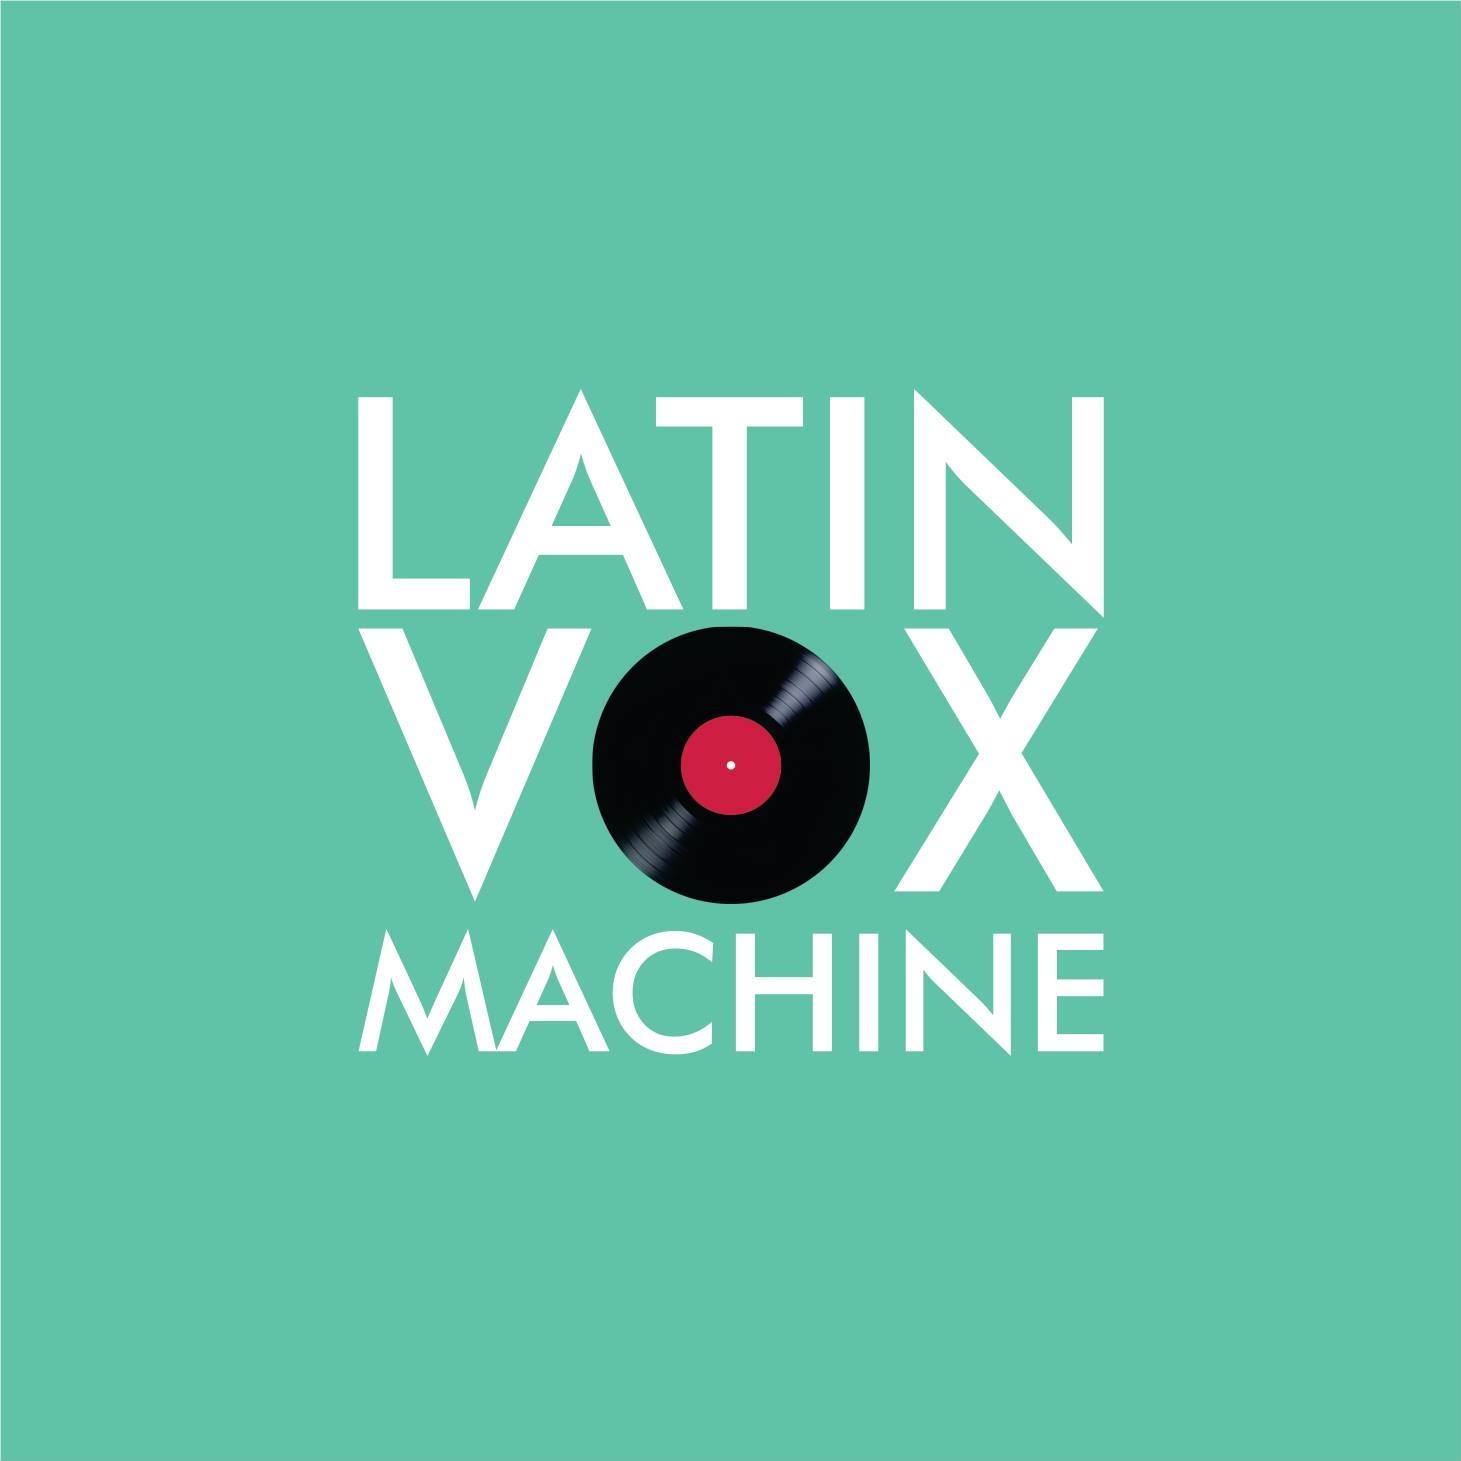 vox machina latin translation